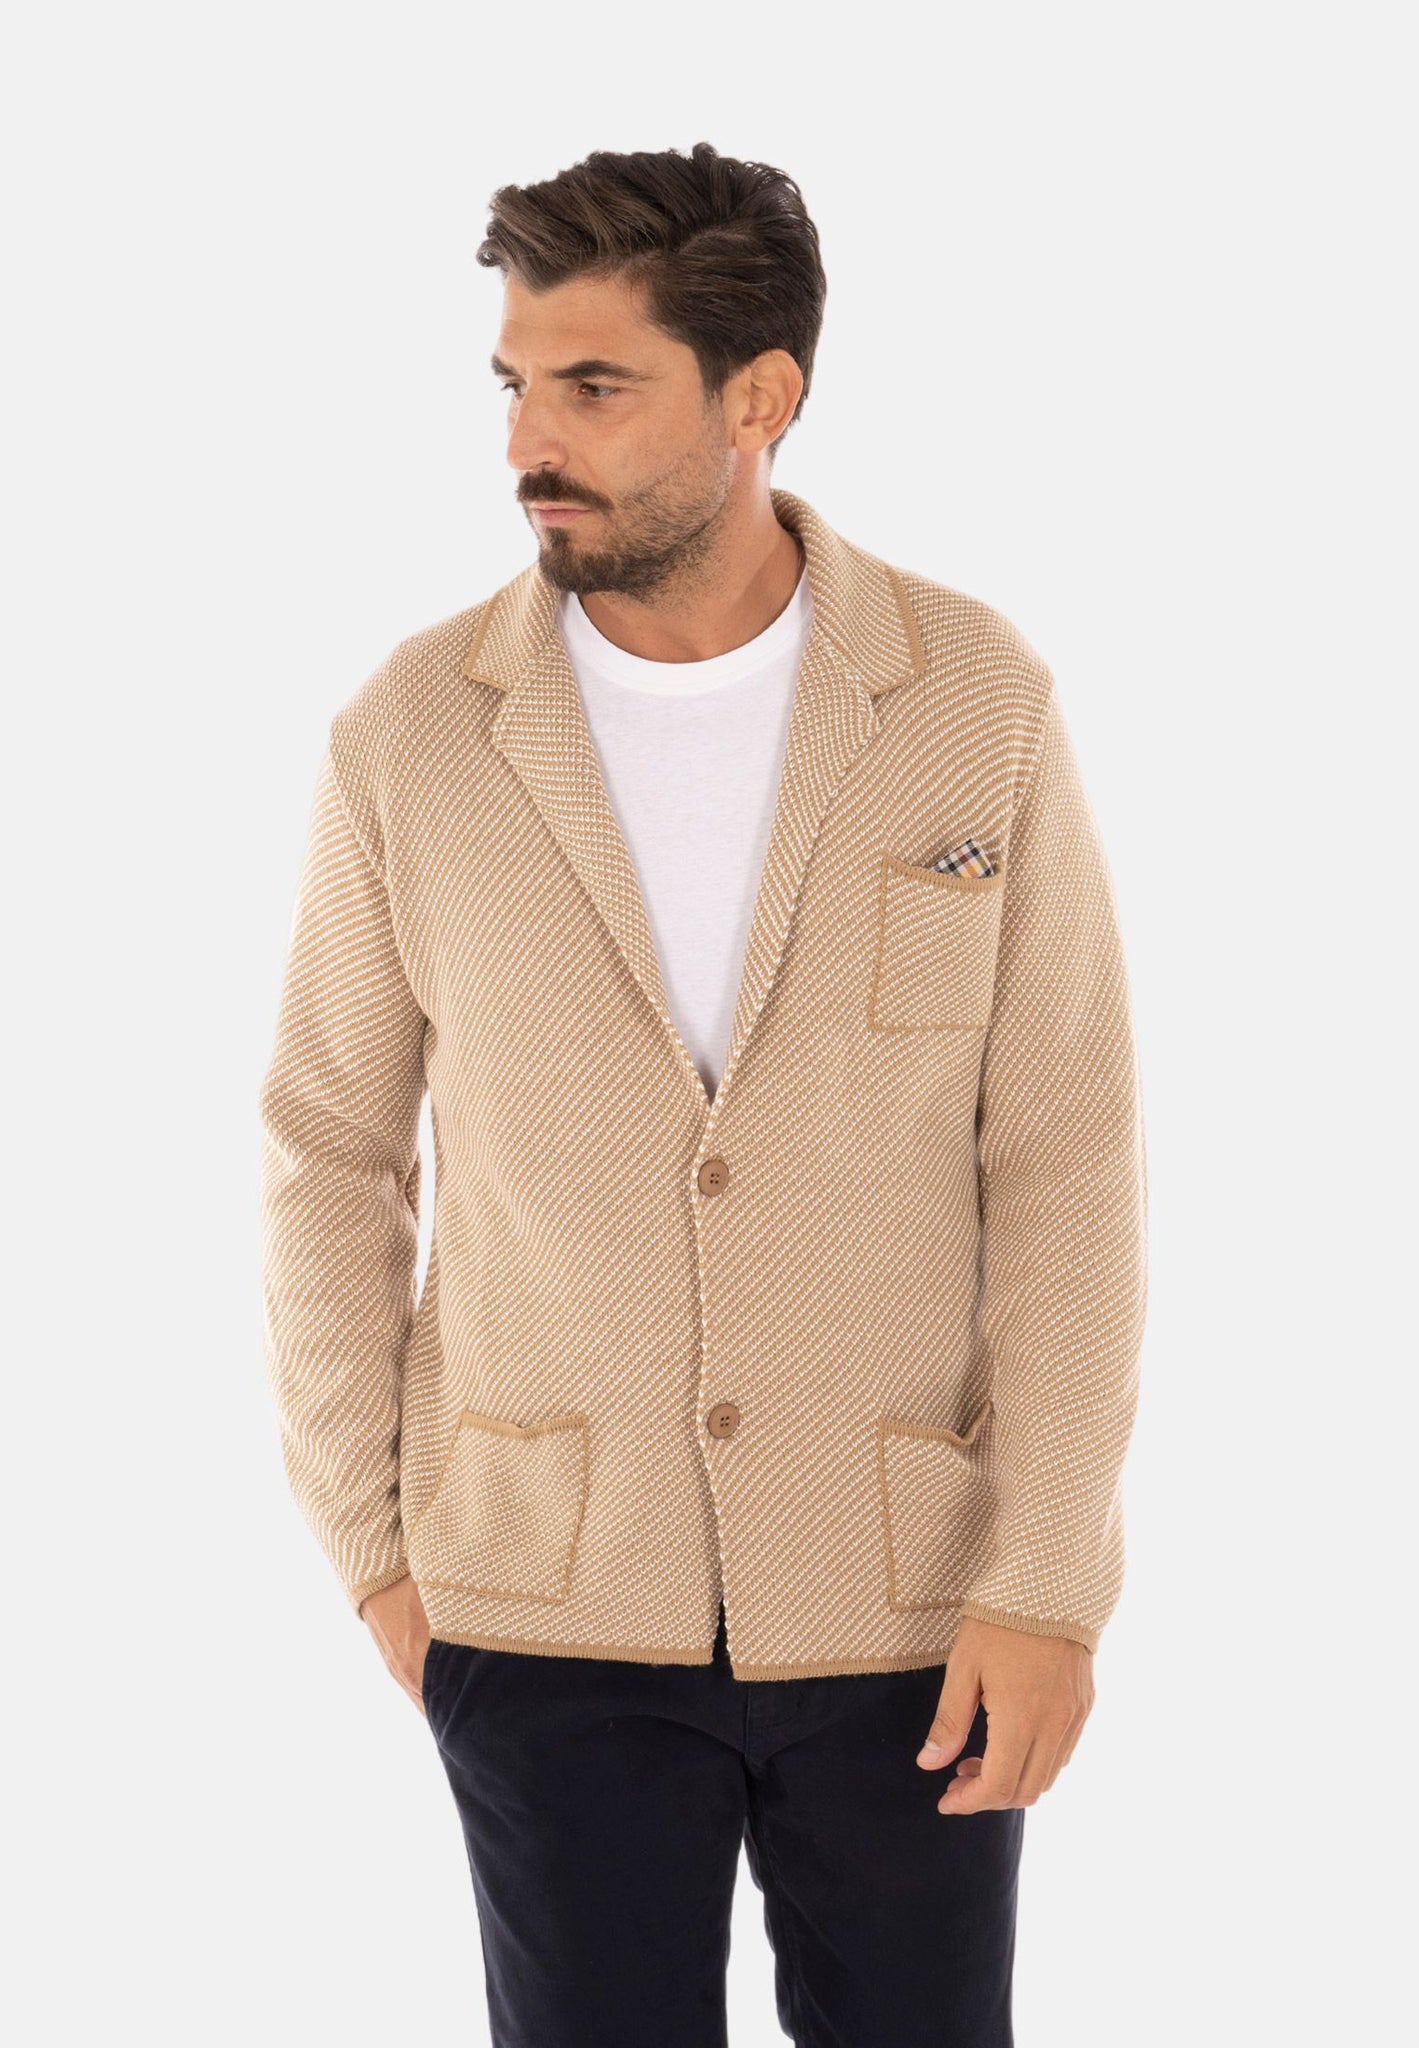 Two-tone knit jacket